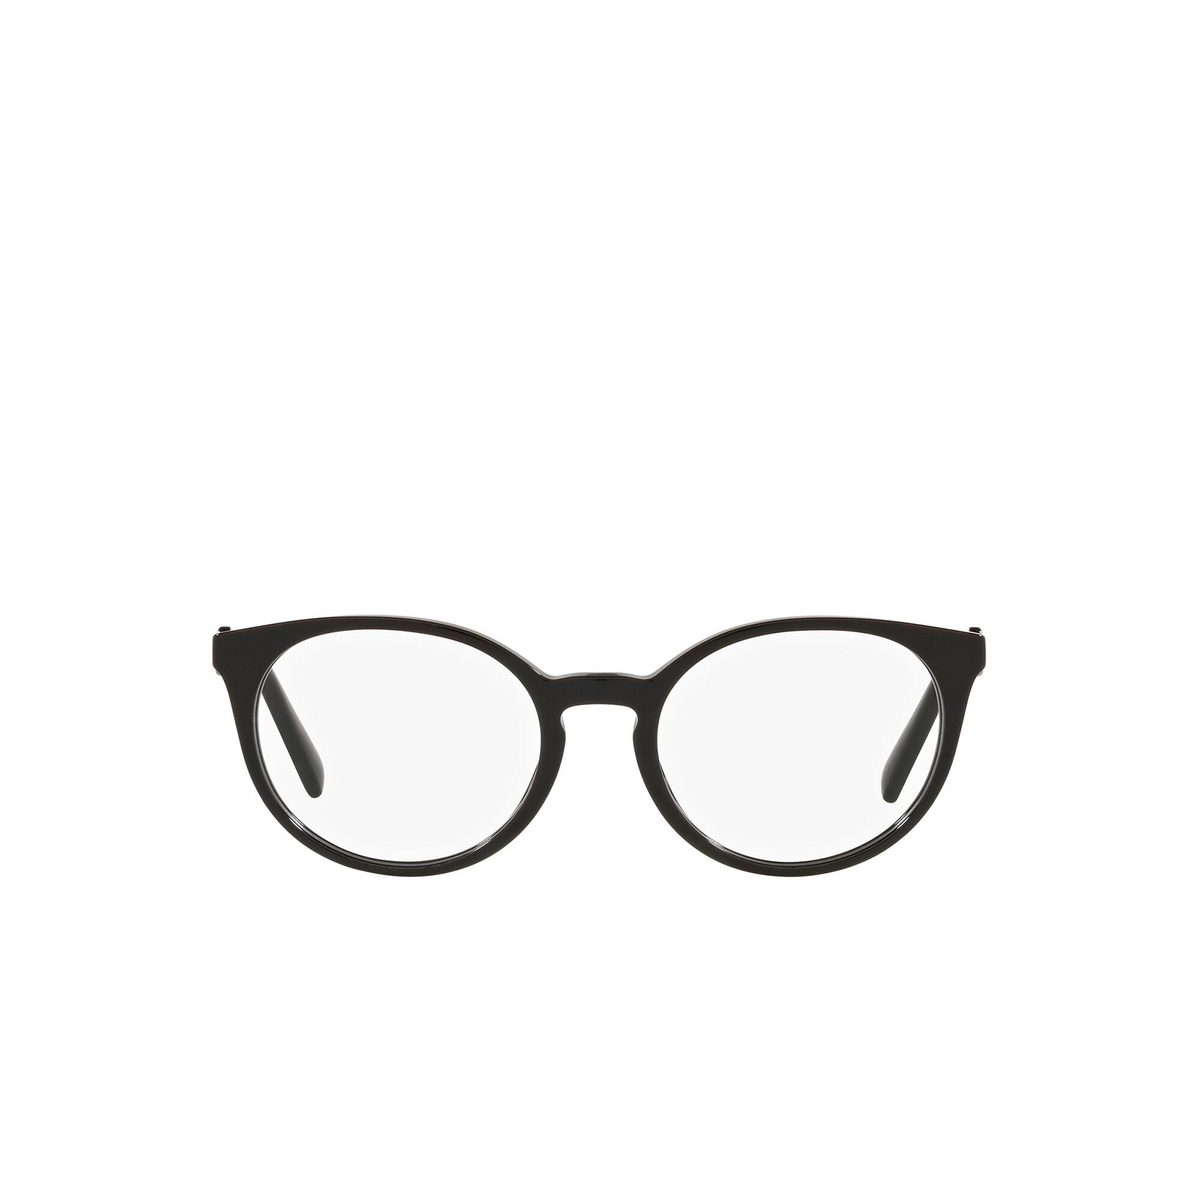 Valentino® Round Eyeglasses: VA3068 color Black 5001 - front view.